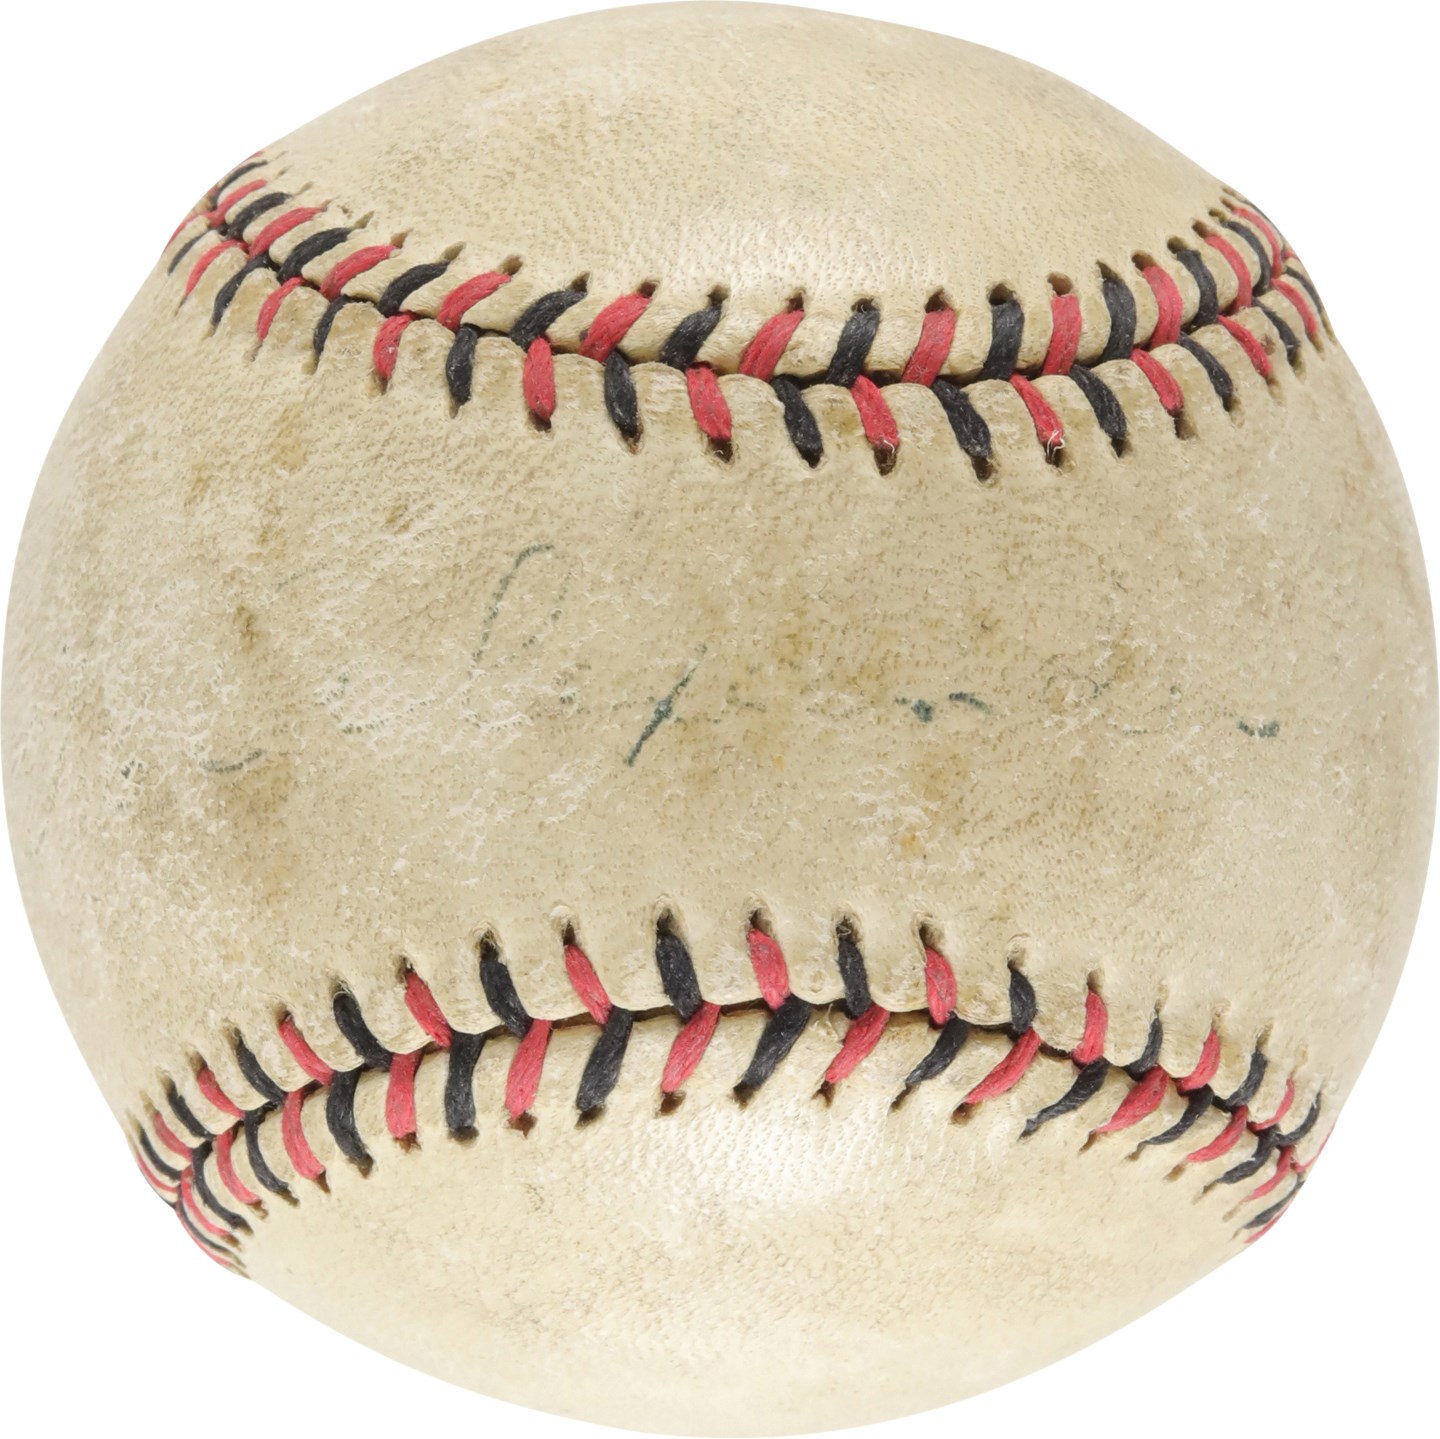 - Grover Cleveland Alexander Single-Signed Baseball (PSA)